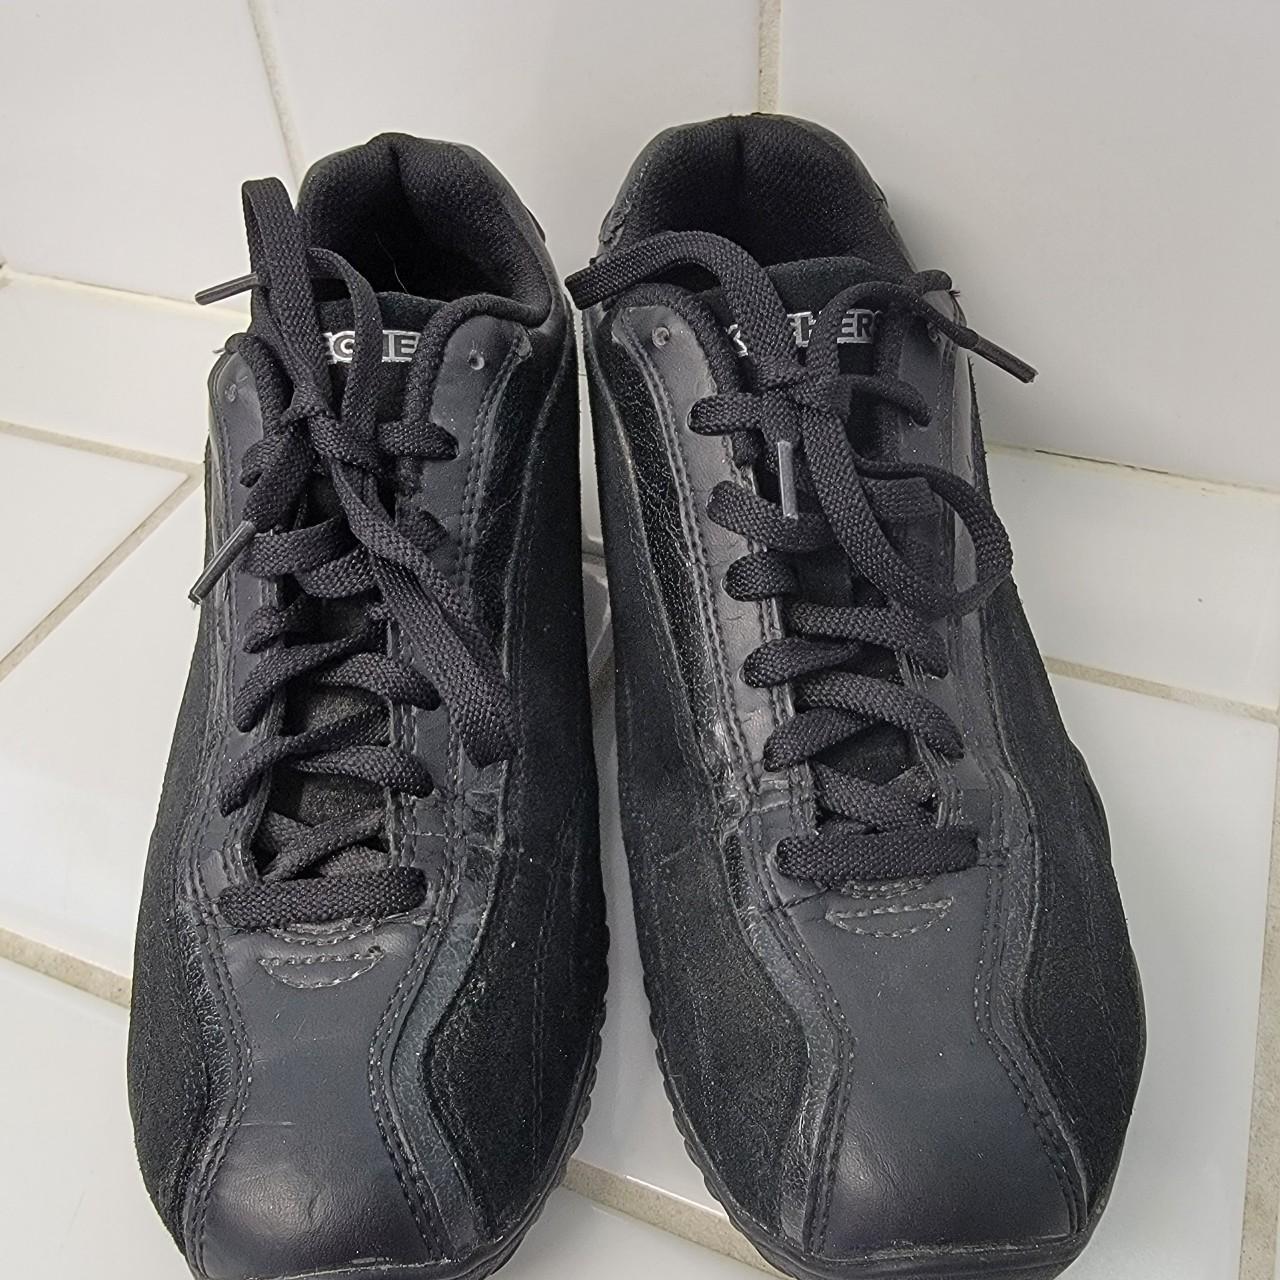 Skechers Black Sneakers Does Show Signs Of Wear On... - Depop